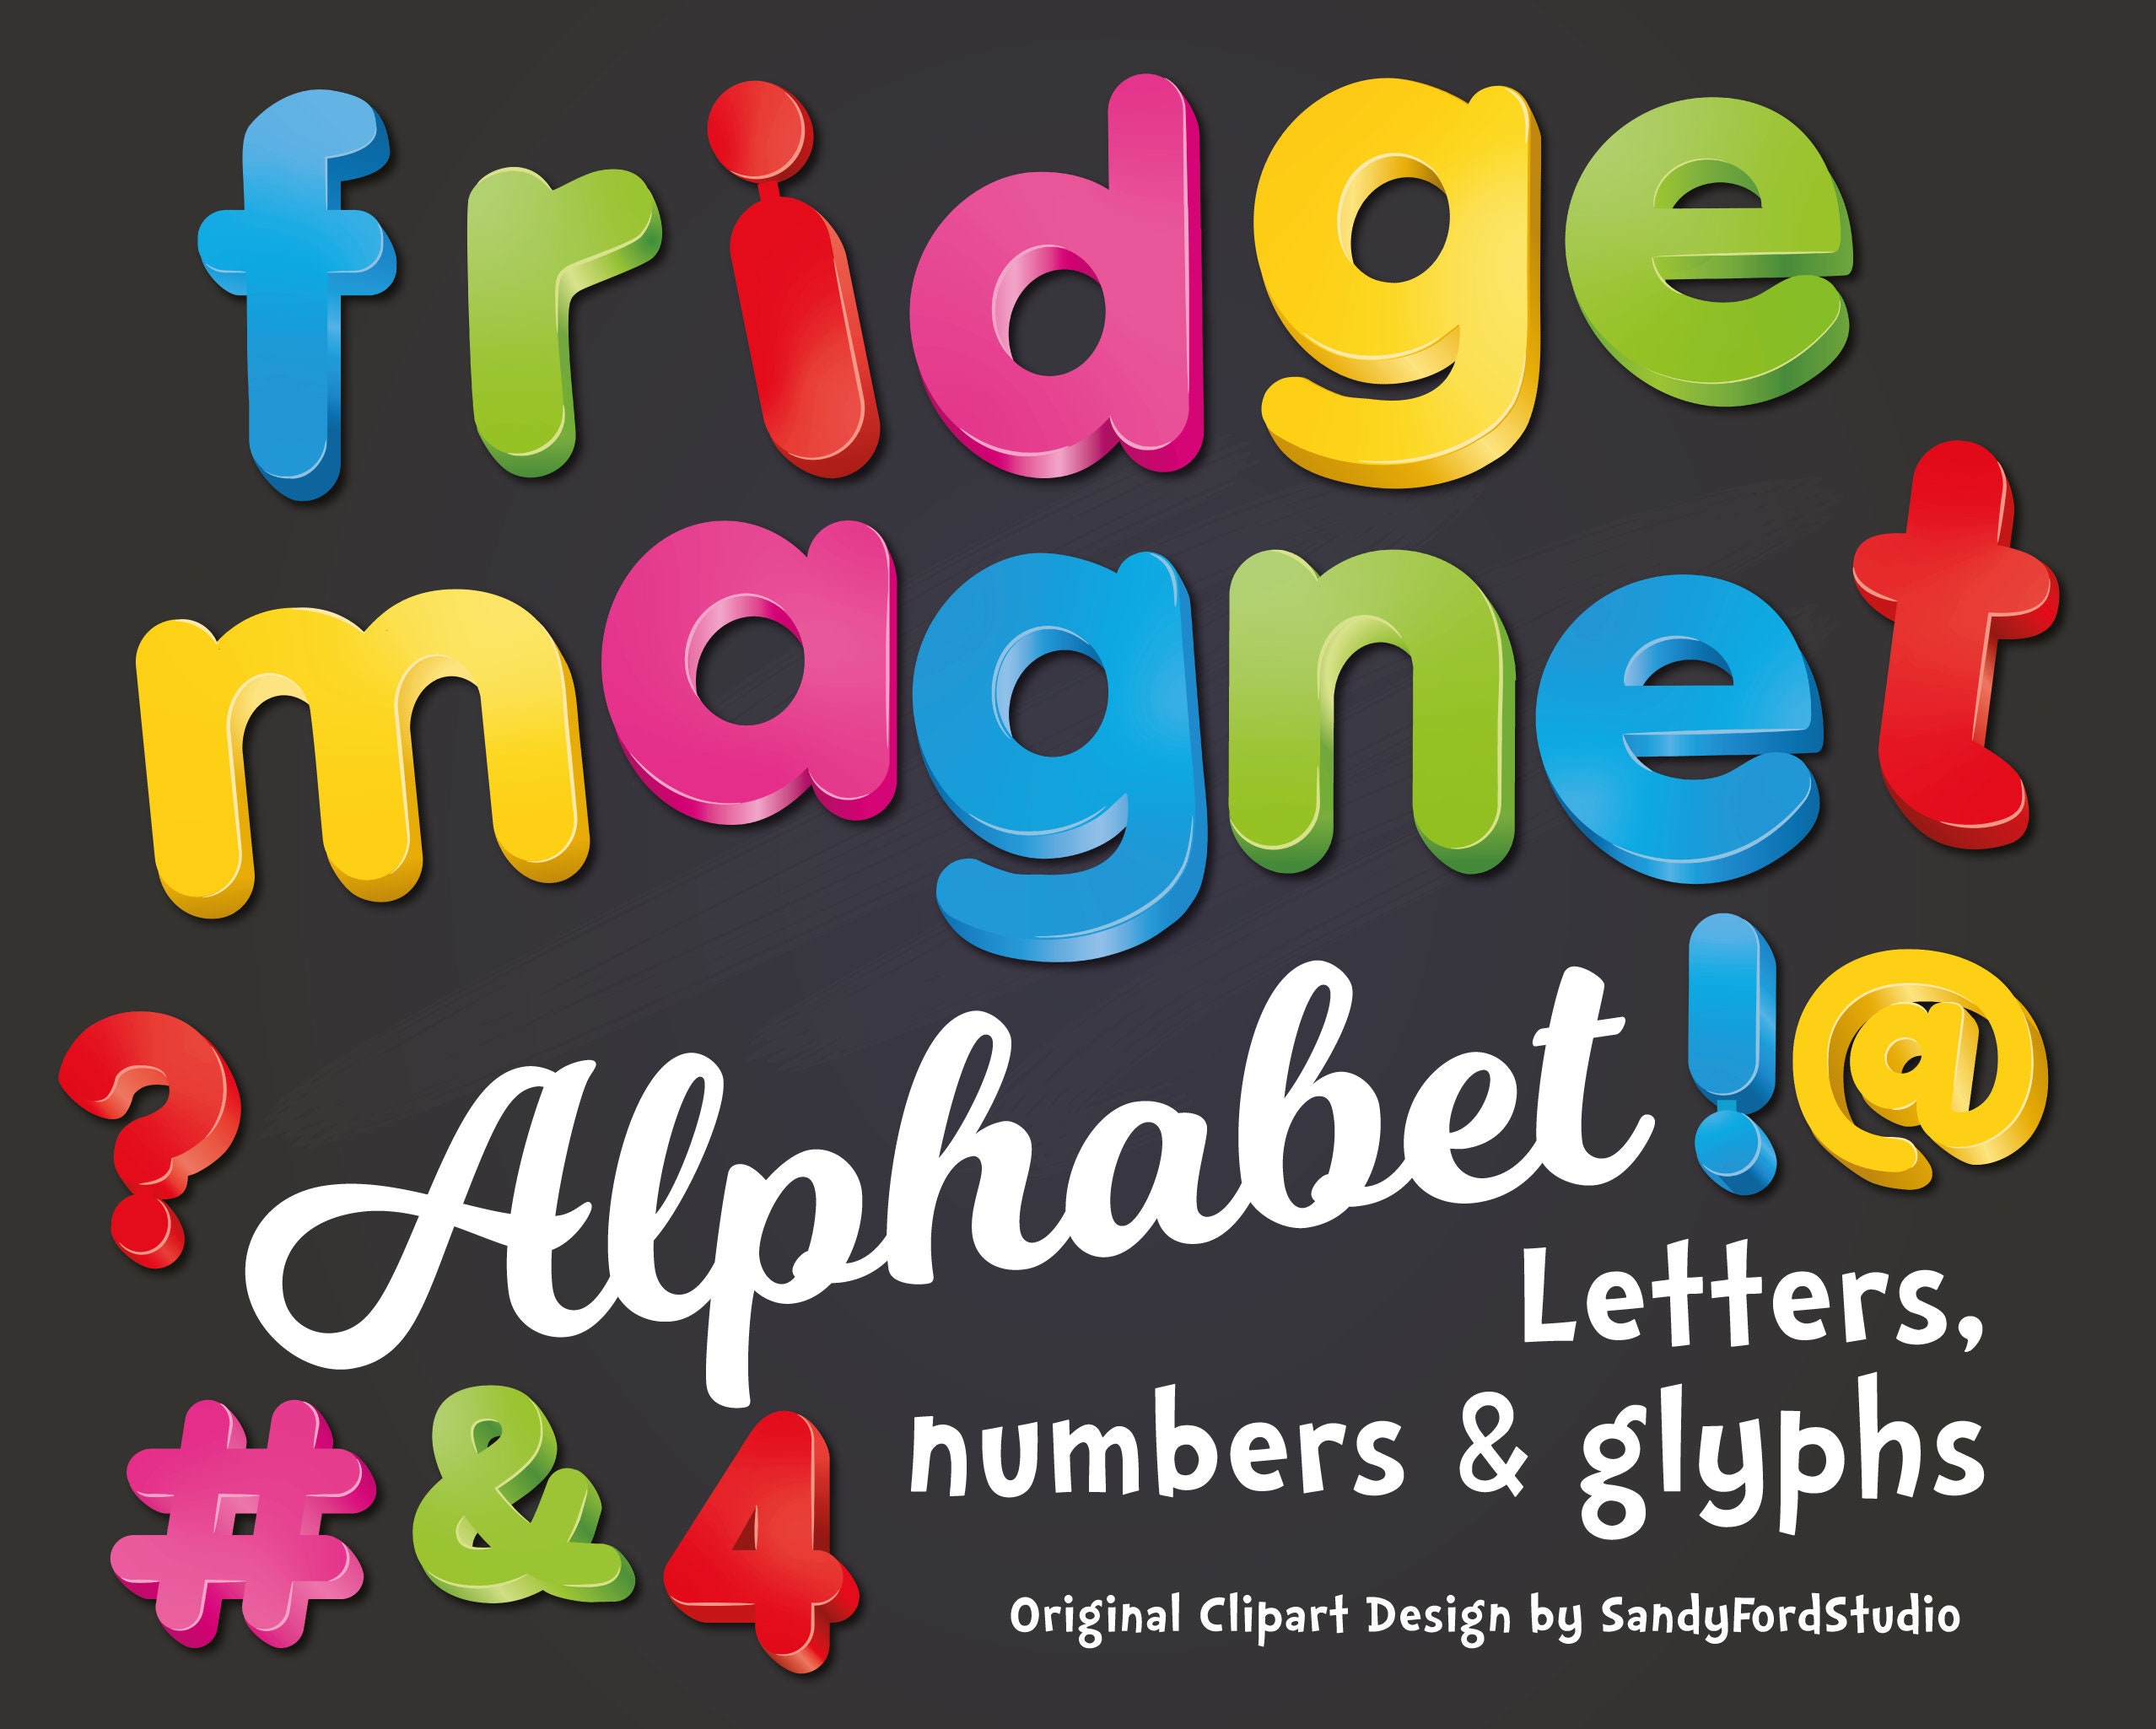 Fridge Alphabet Clipart Lower Case Letters and